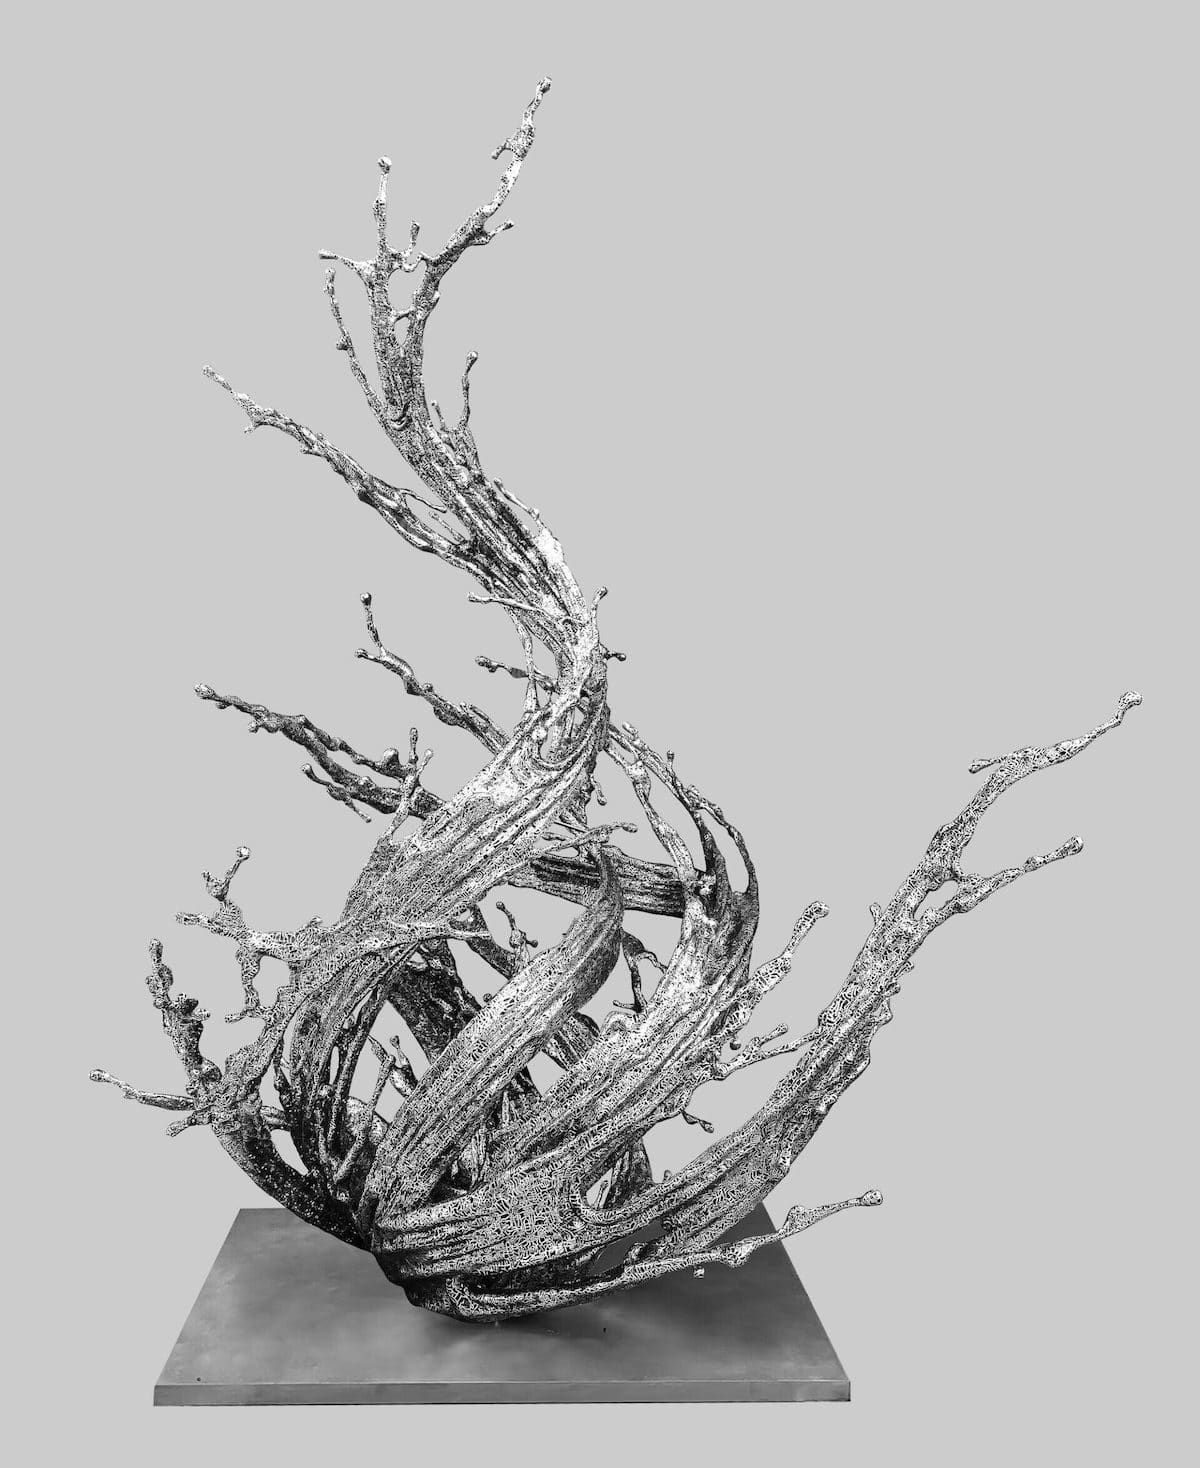 Splashing Water, Stunning Fluid Shaped Metal Sculptures By Zheng Lu (1)